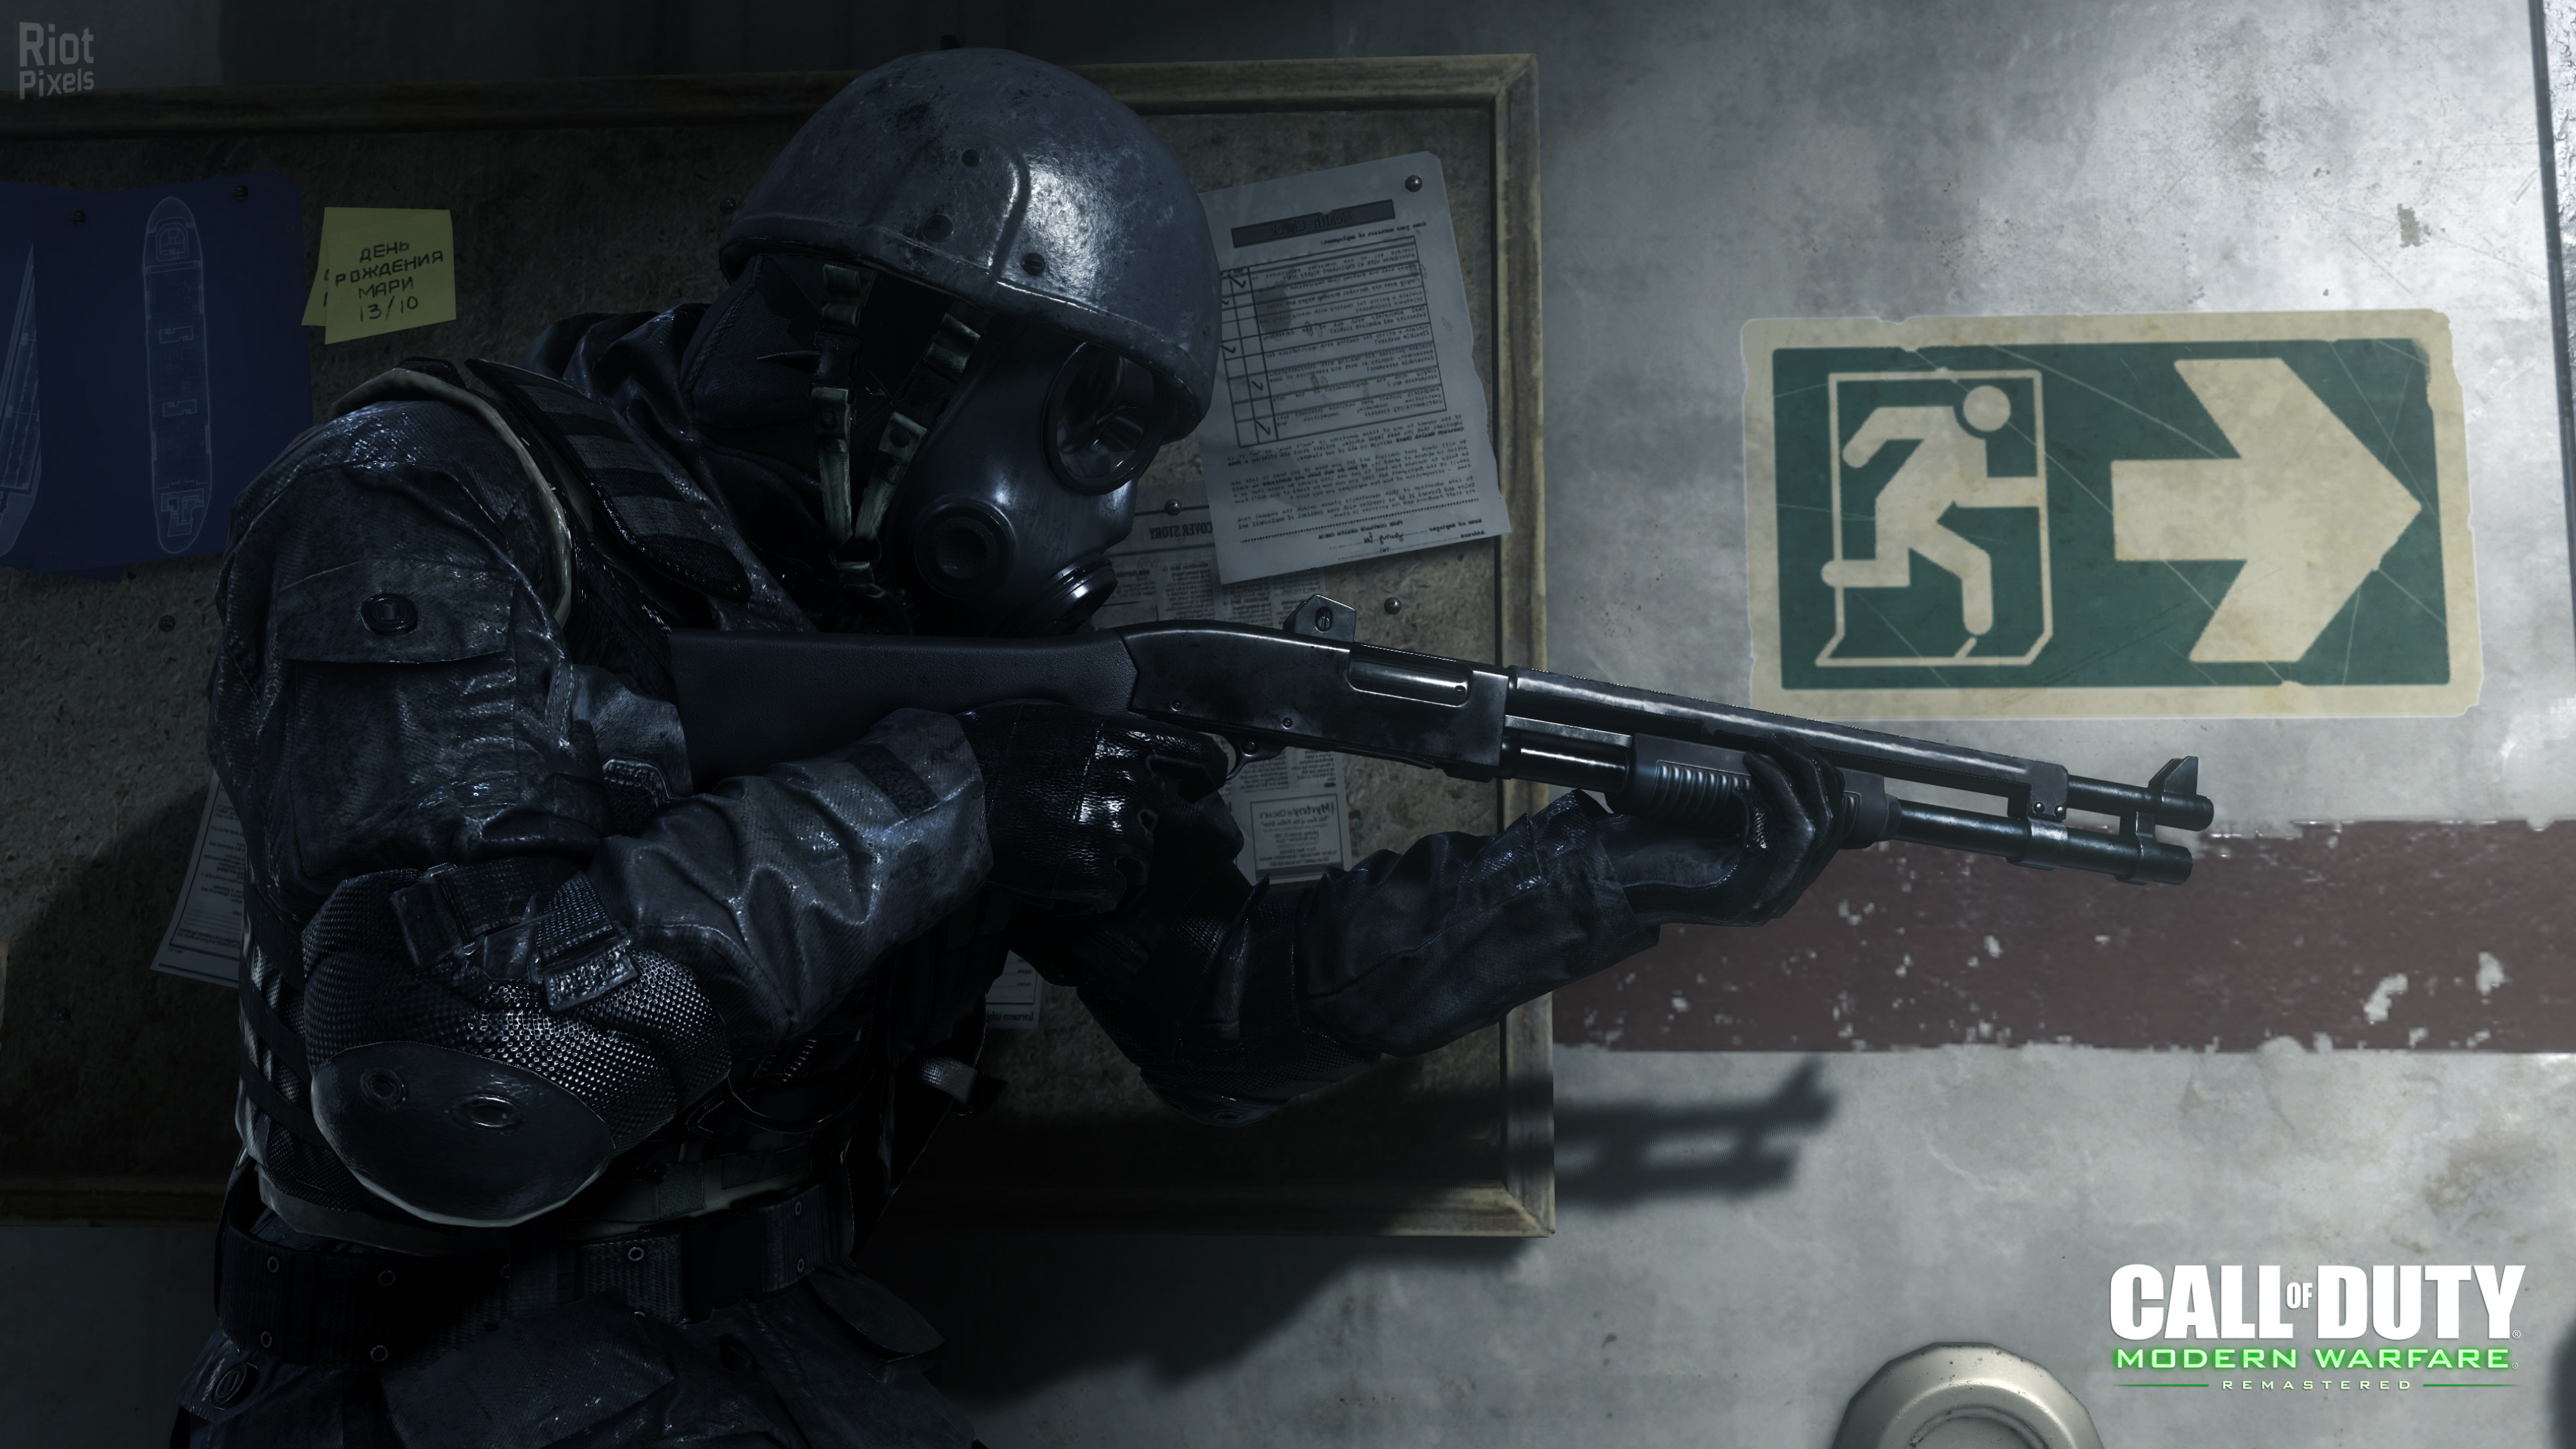 Call Of Duty 4: Modern Warfare Wallpapers